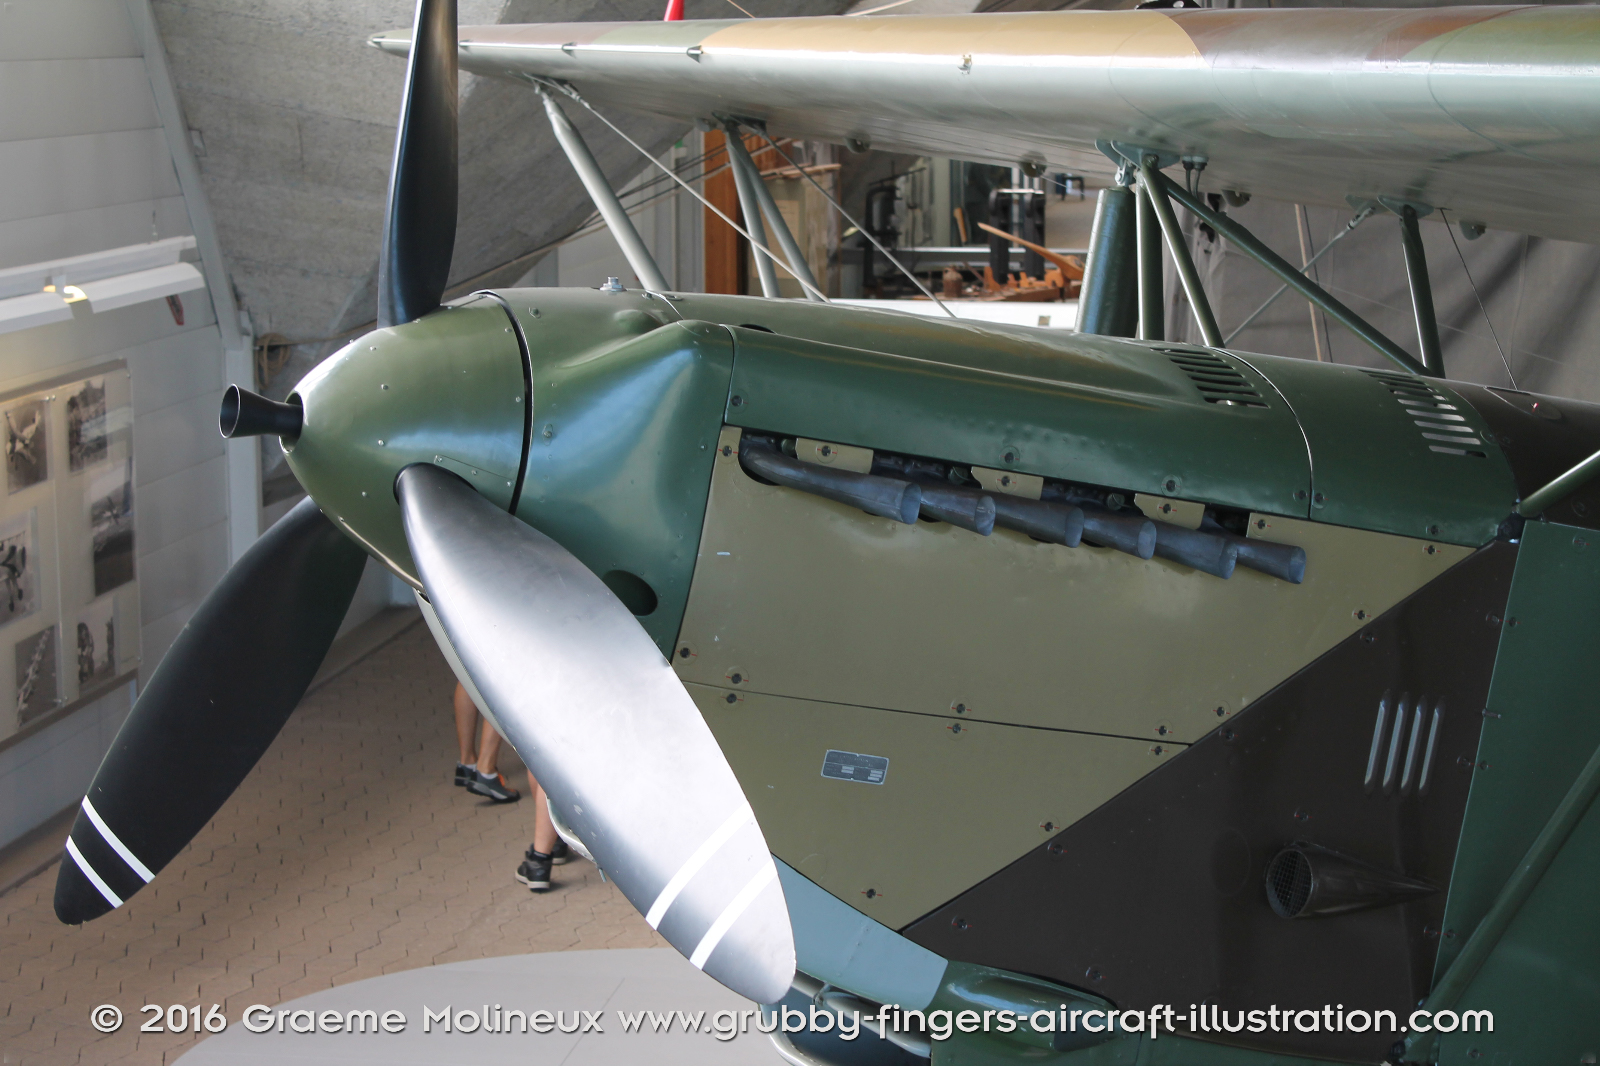 K+W_C-35_180_Swiss_Air_Force_Museum_2015_34_GrubbyFingers